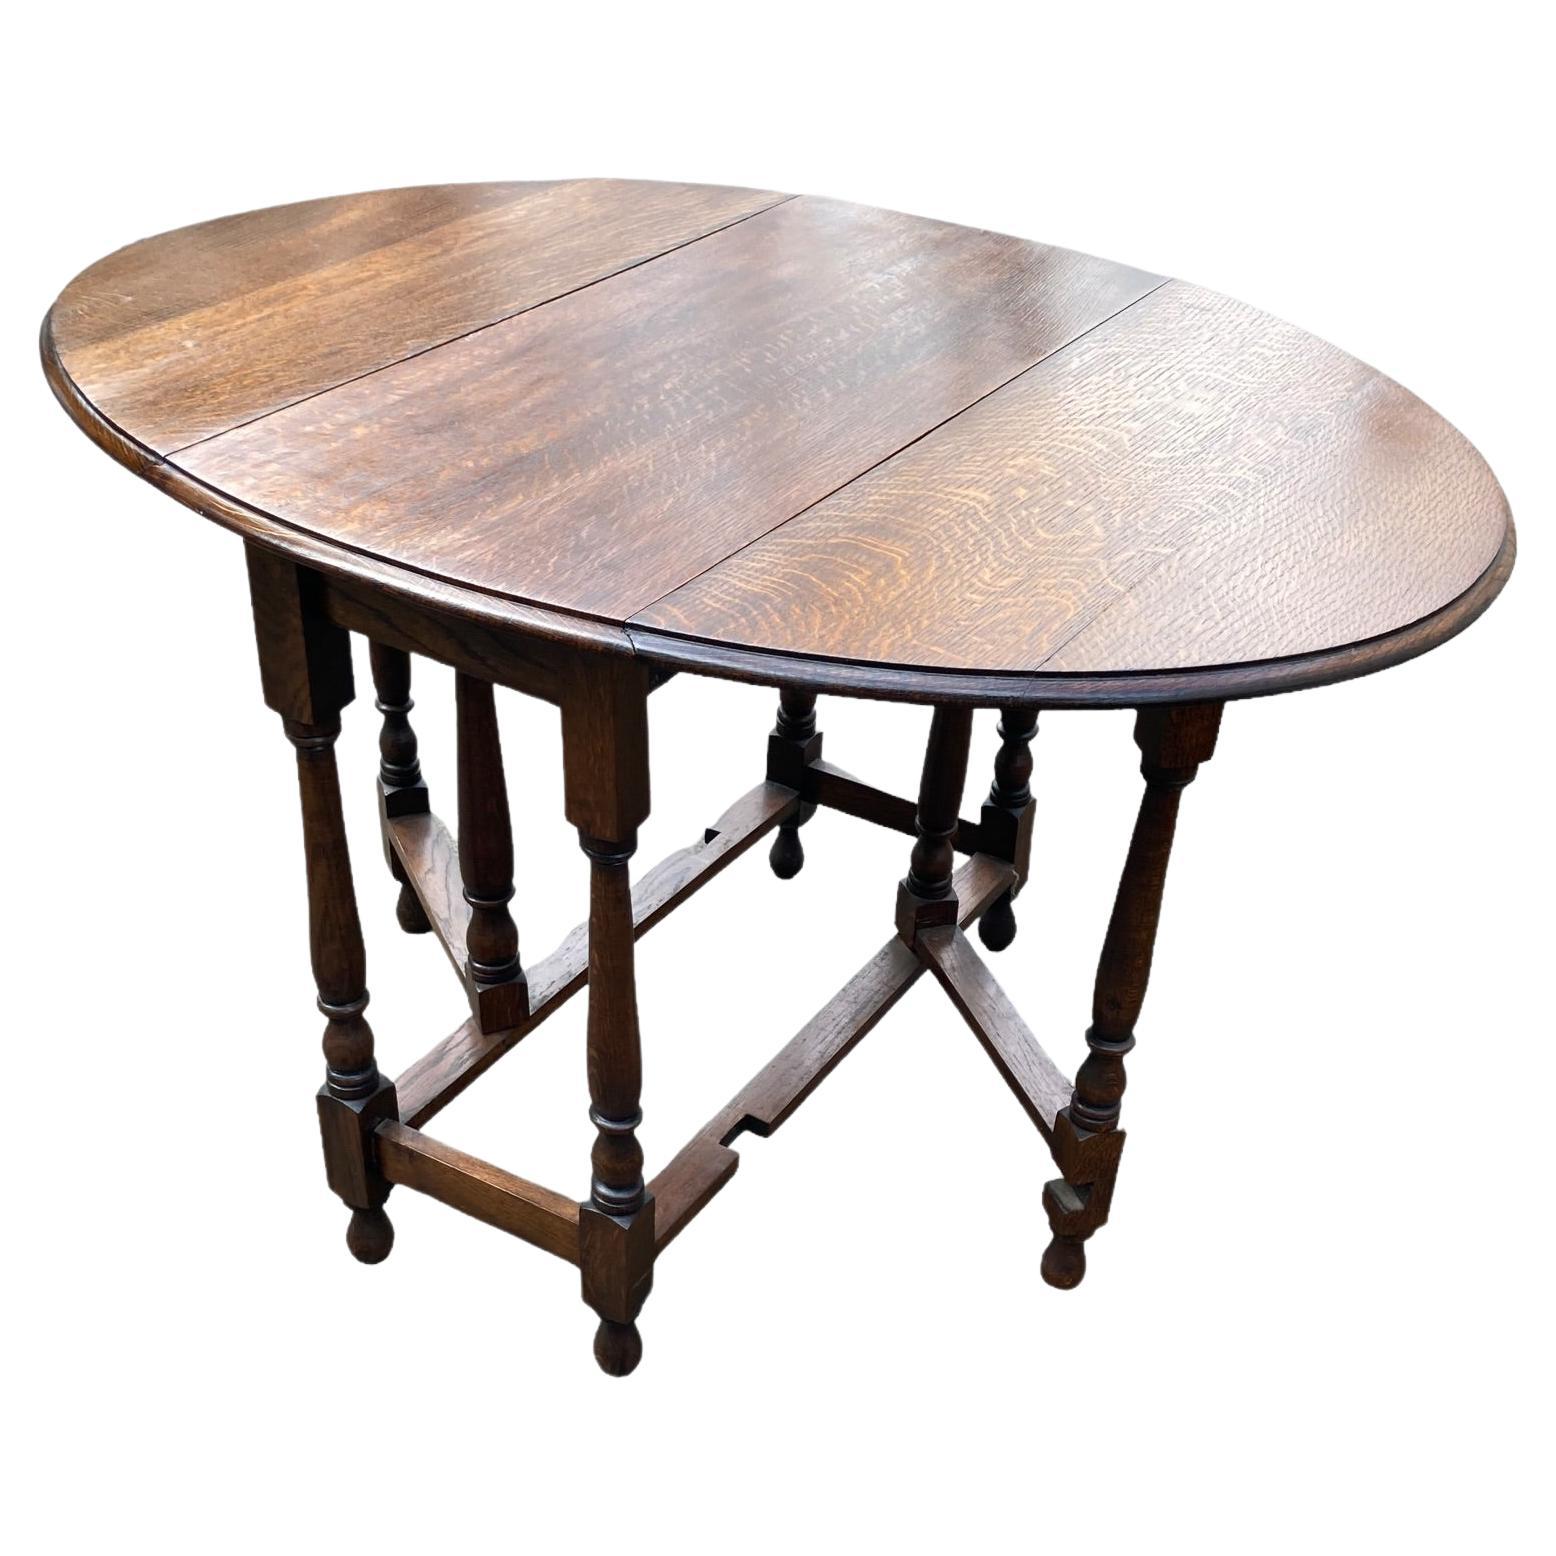 Oval shaped Oak Gate Leg dining table